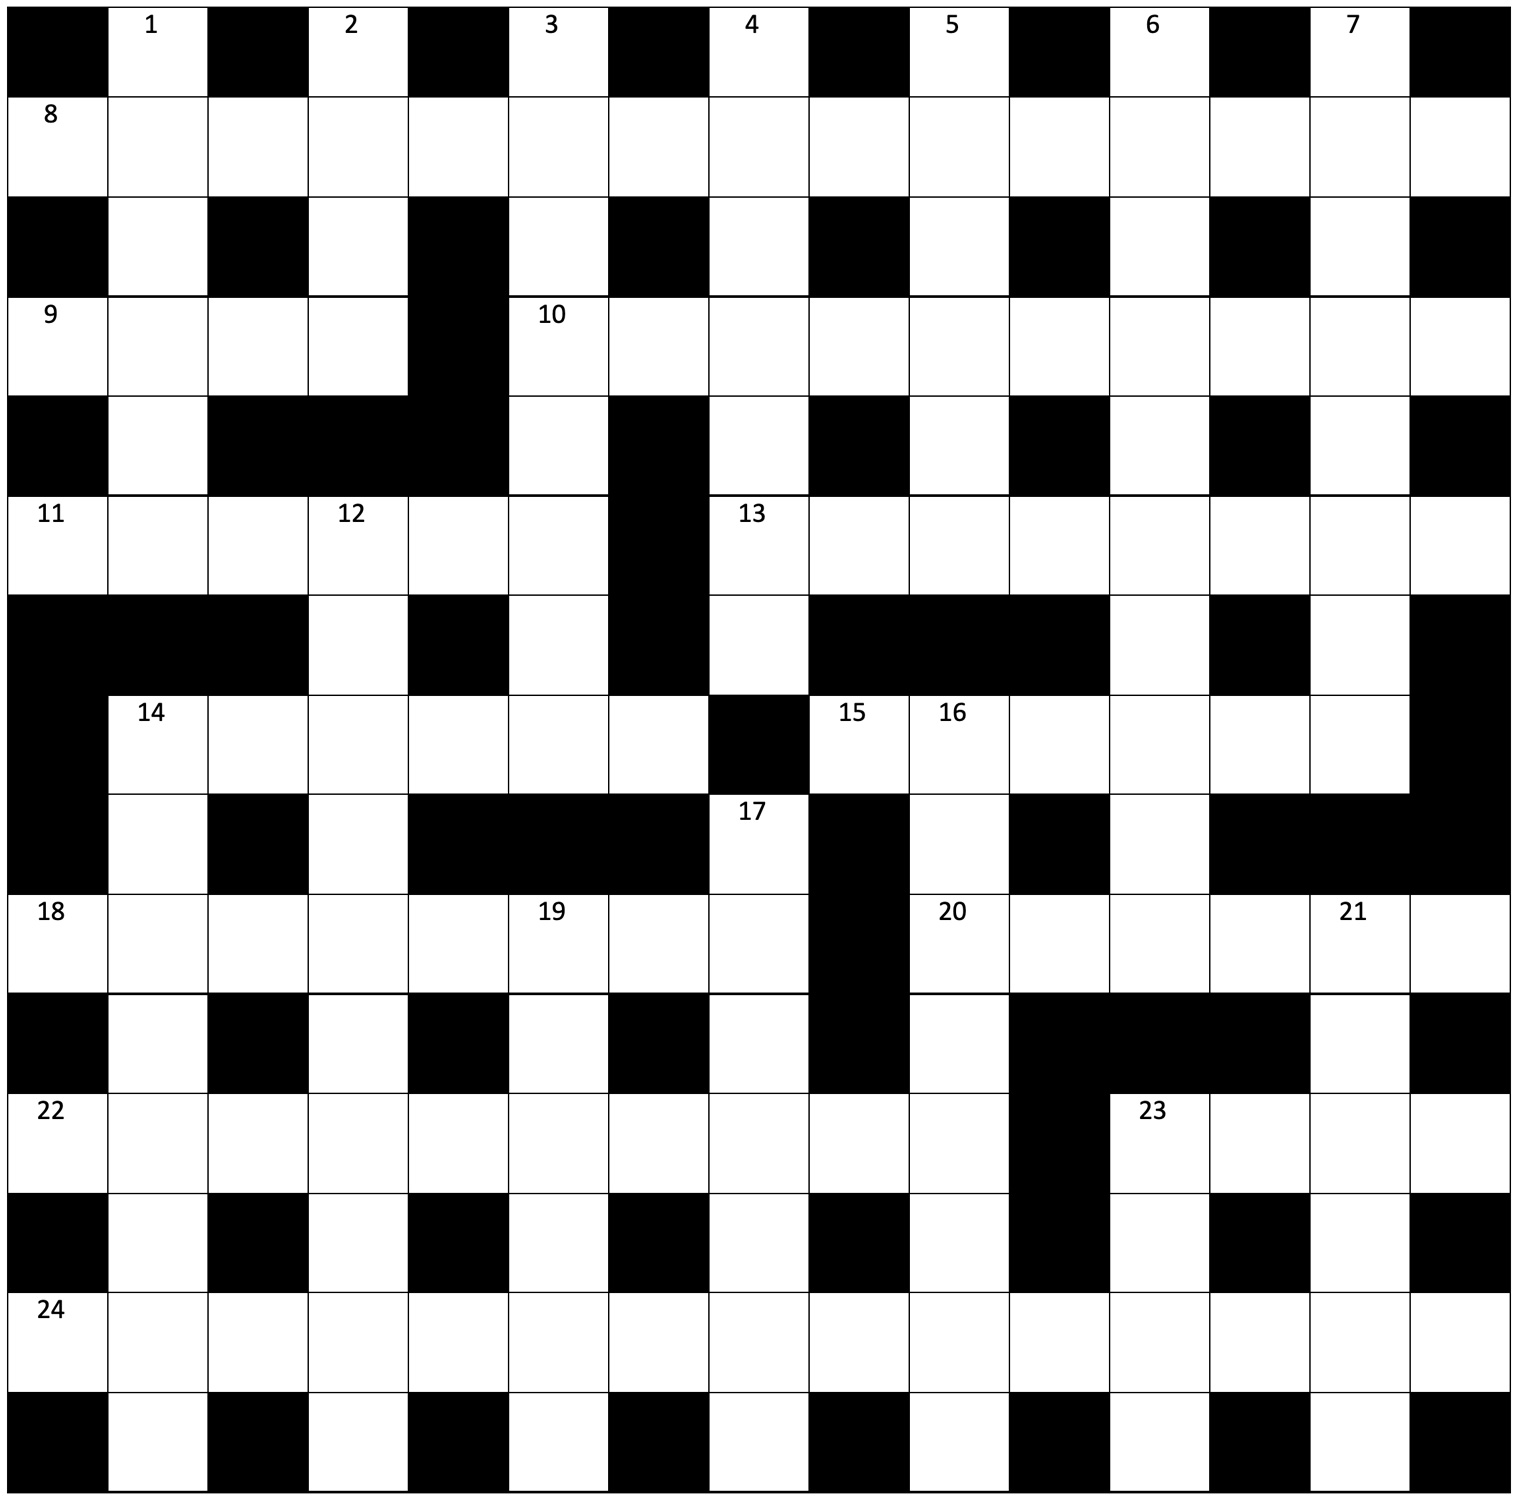 Cryptic crossword No.5